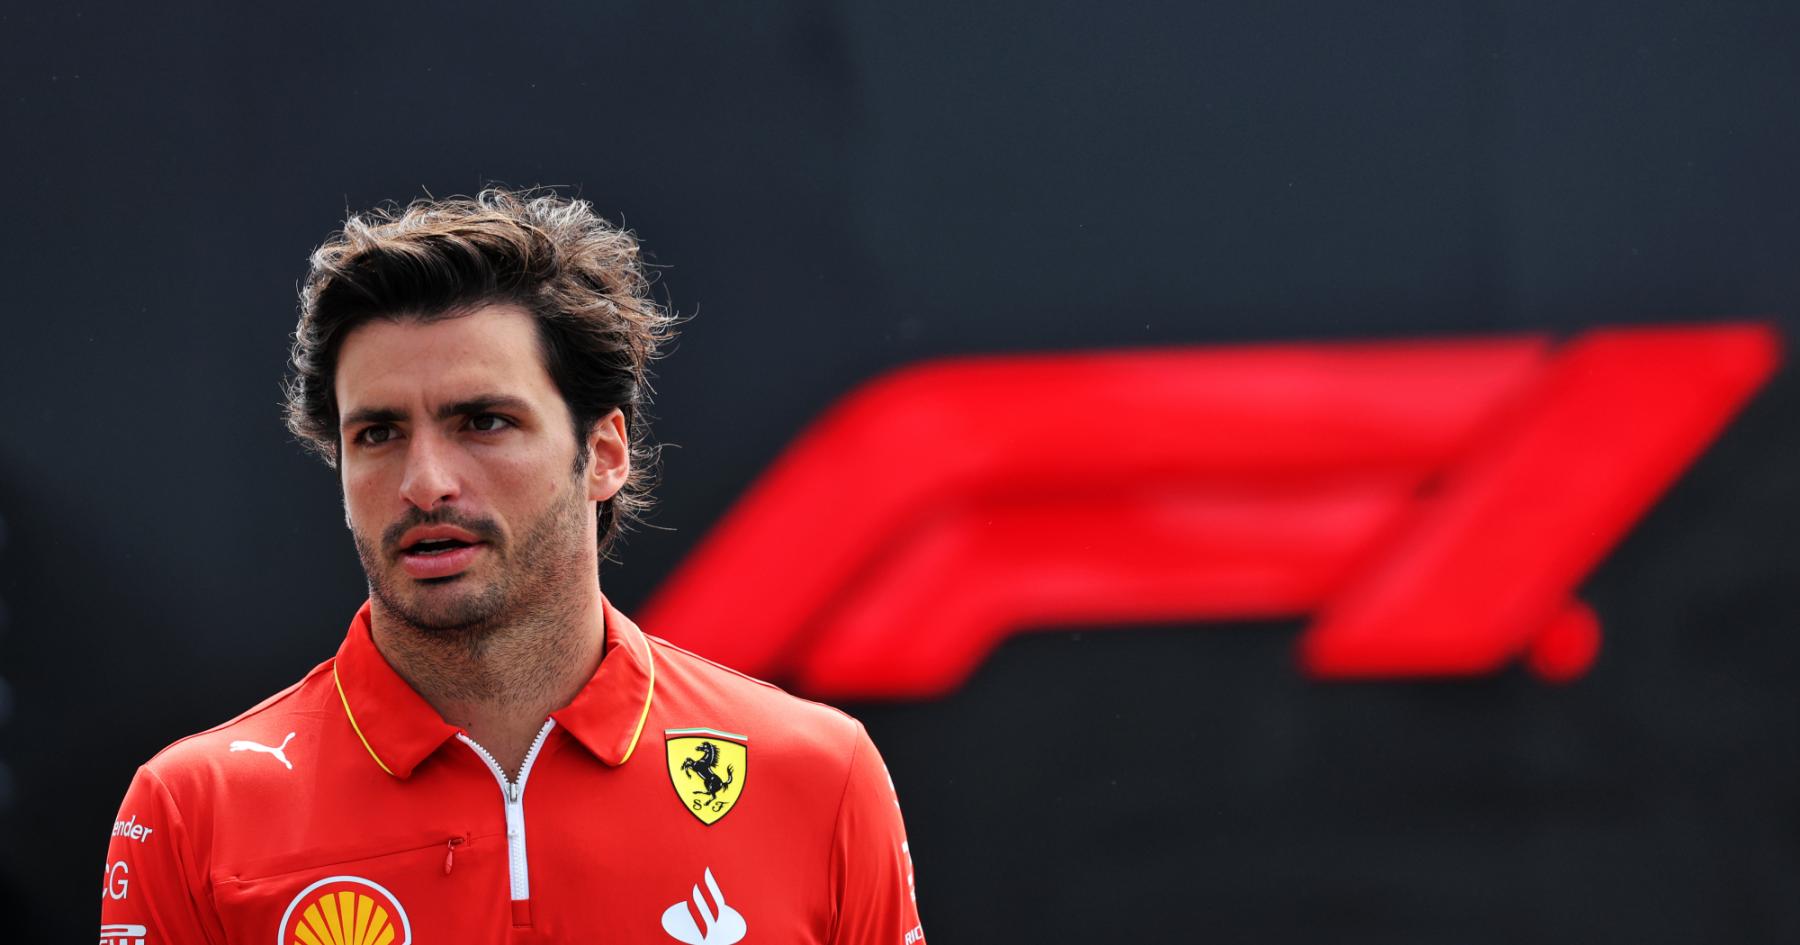 Ferrari Shakeup: Sainz Dropped for Saudi Arabia Grand Prix